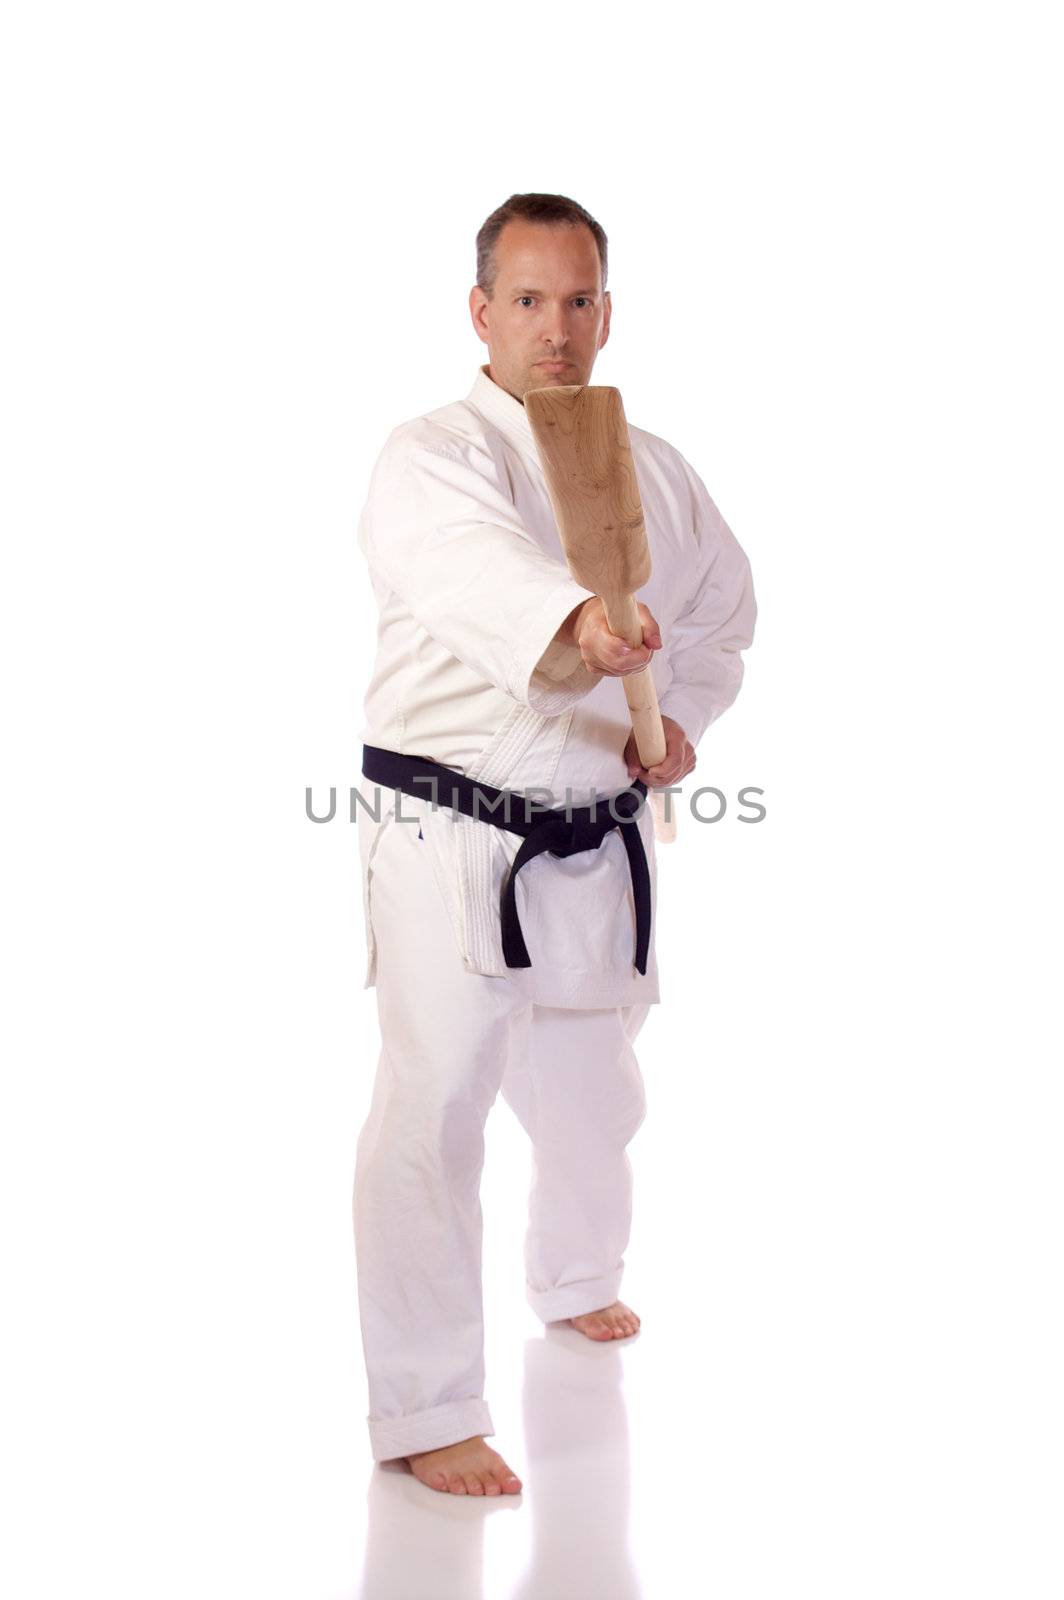 Man in karate-gi holding a kai